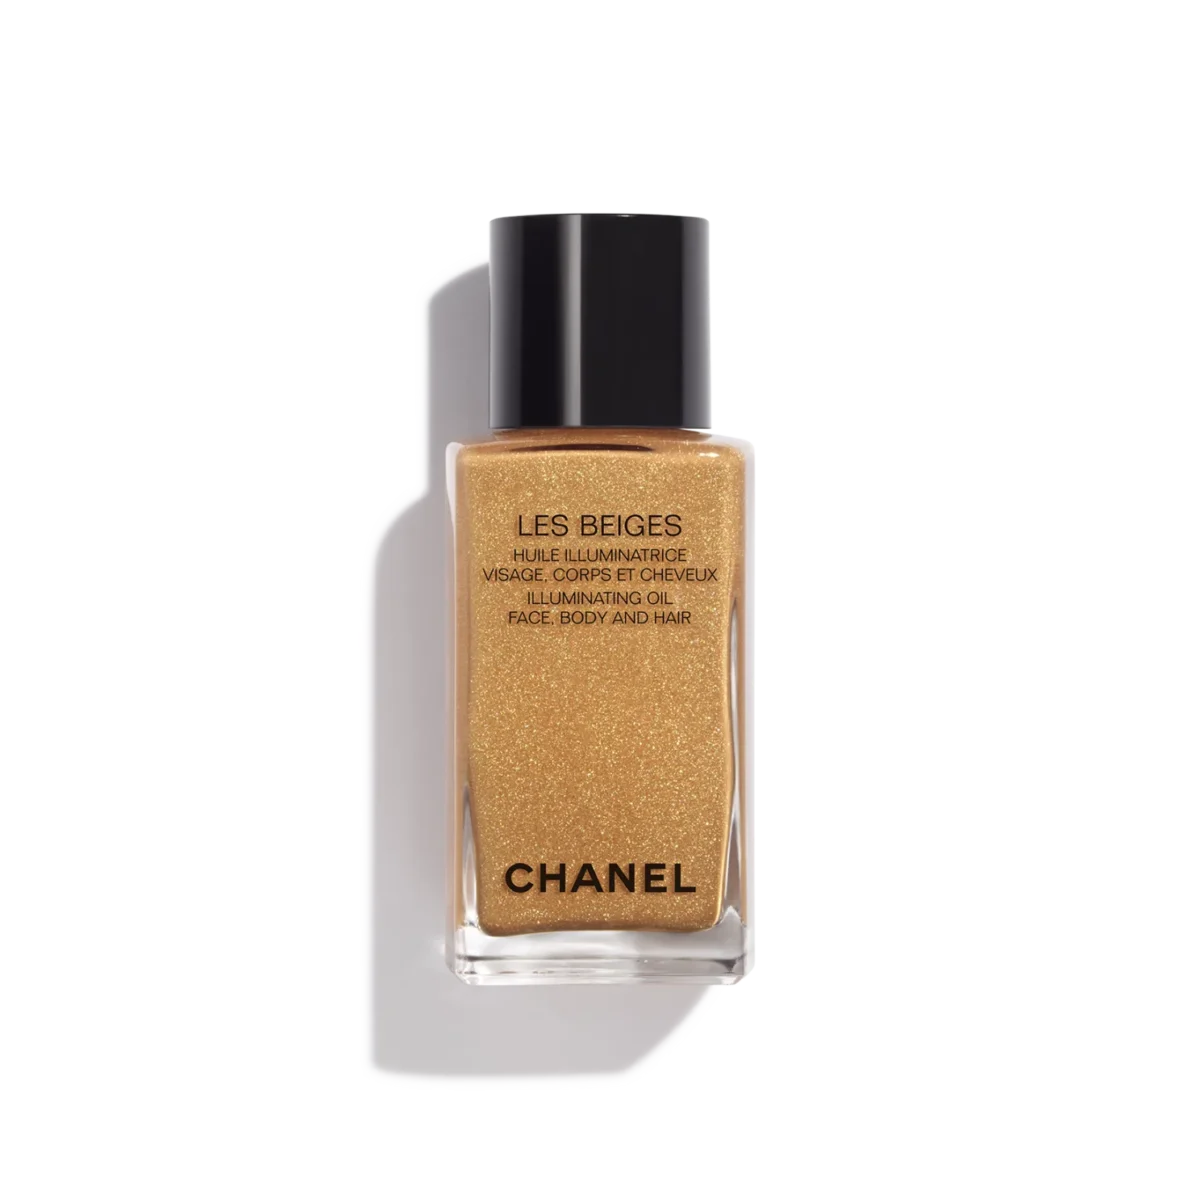 Les Beiges Huile Illuminatrice, Chanel